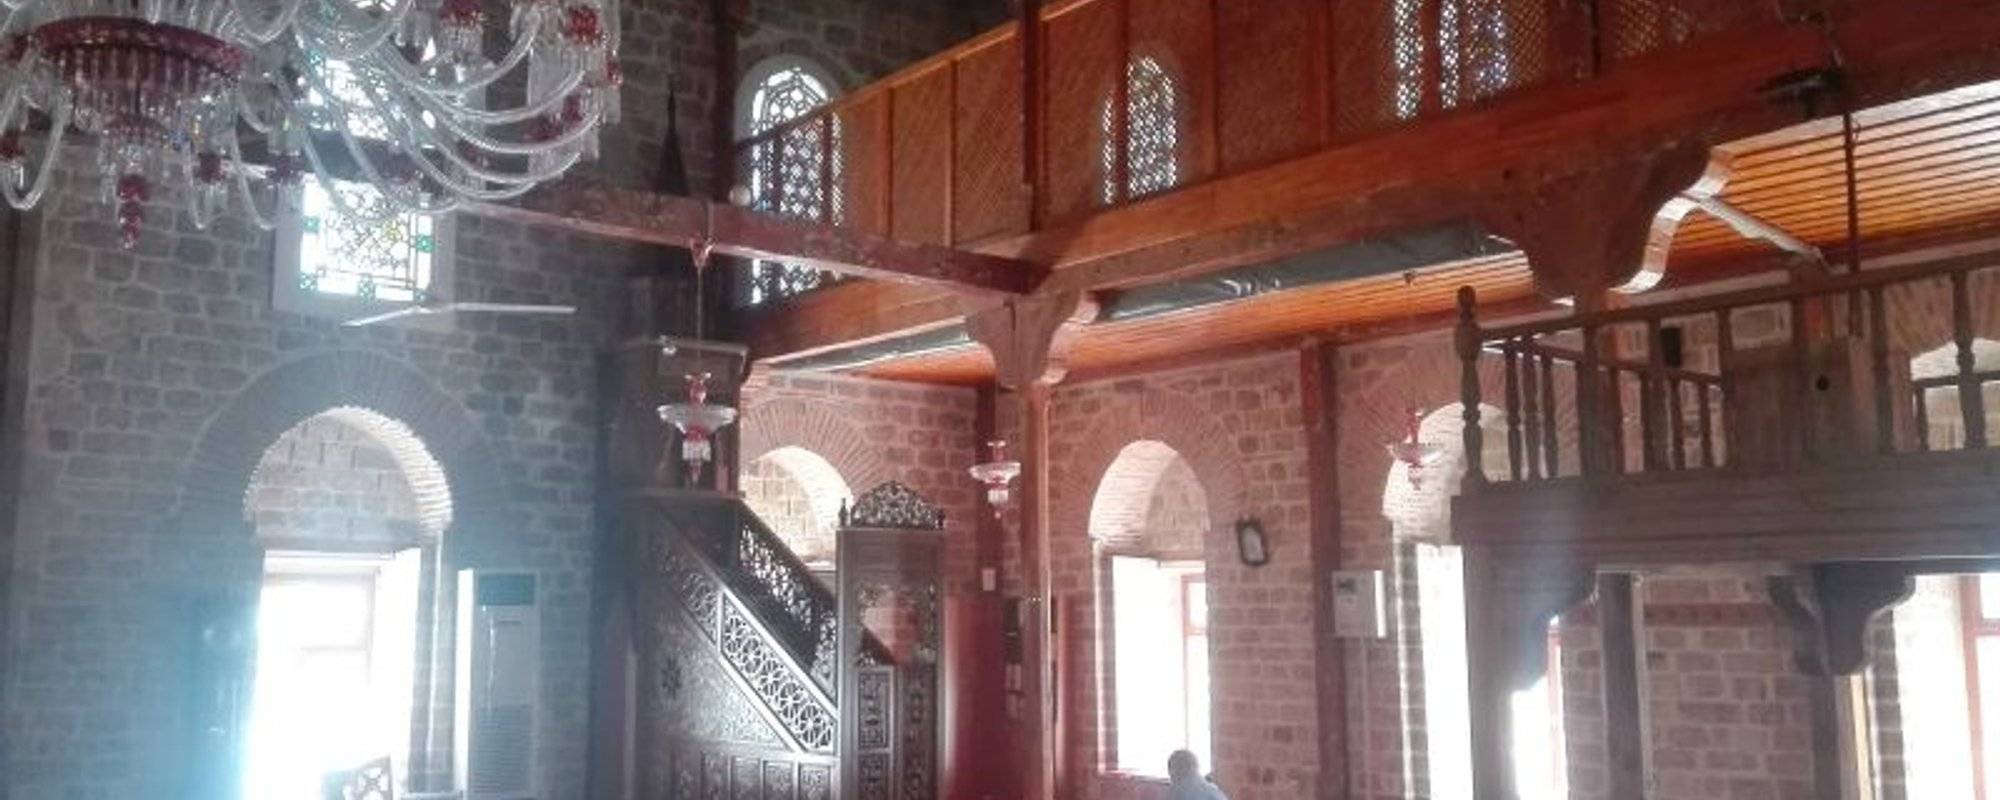 Travel Pro Places of Interest #86: Alladdin Mosque in Beypazari Turkey! (11 photos)